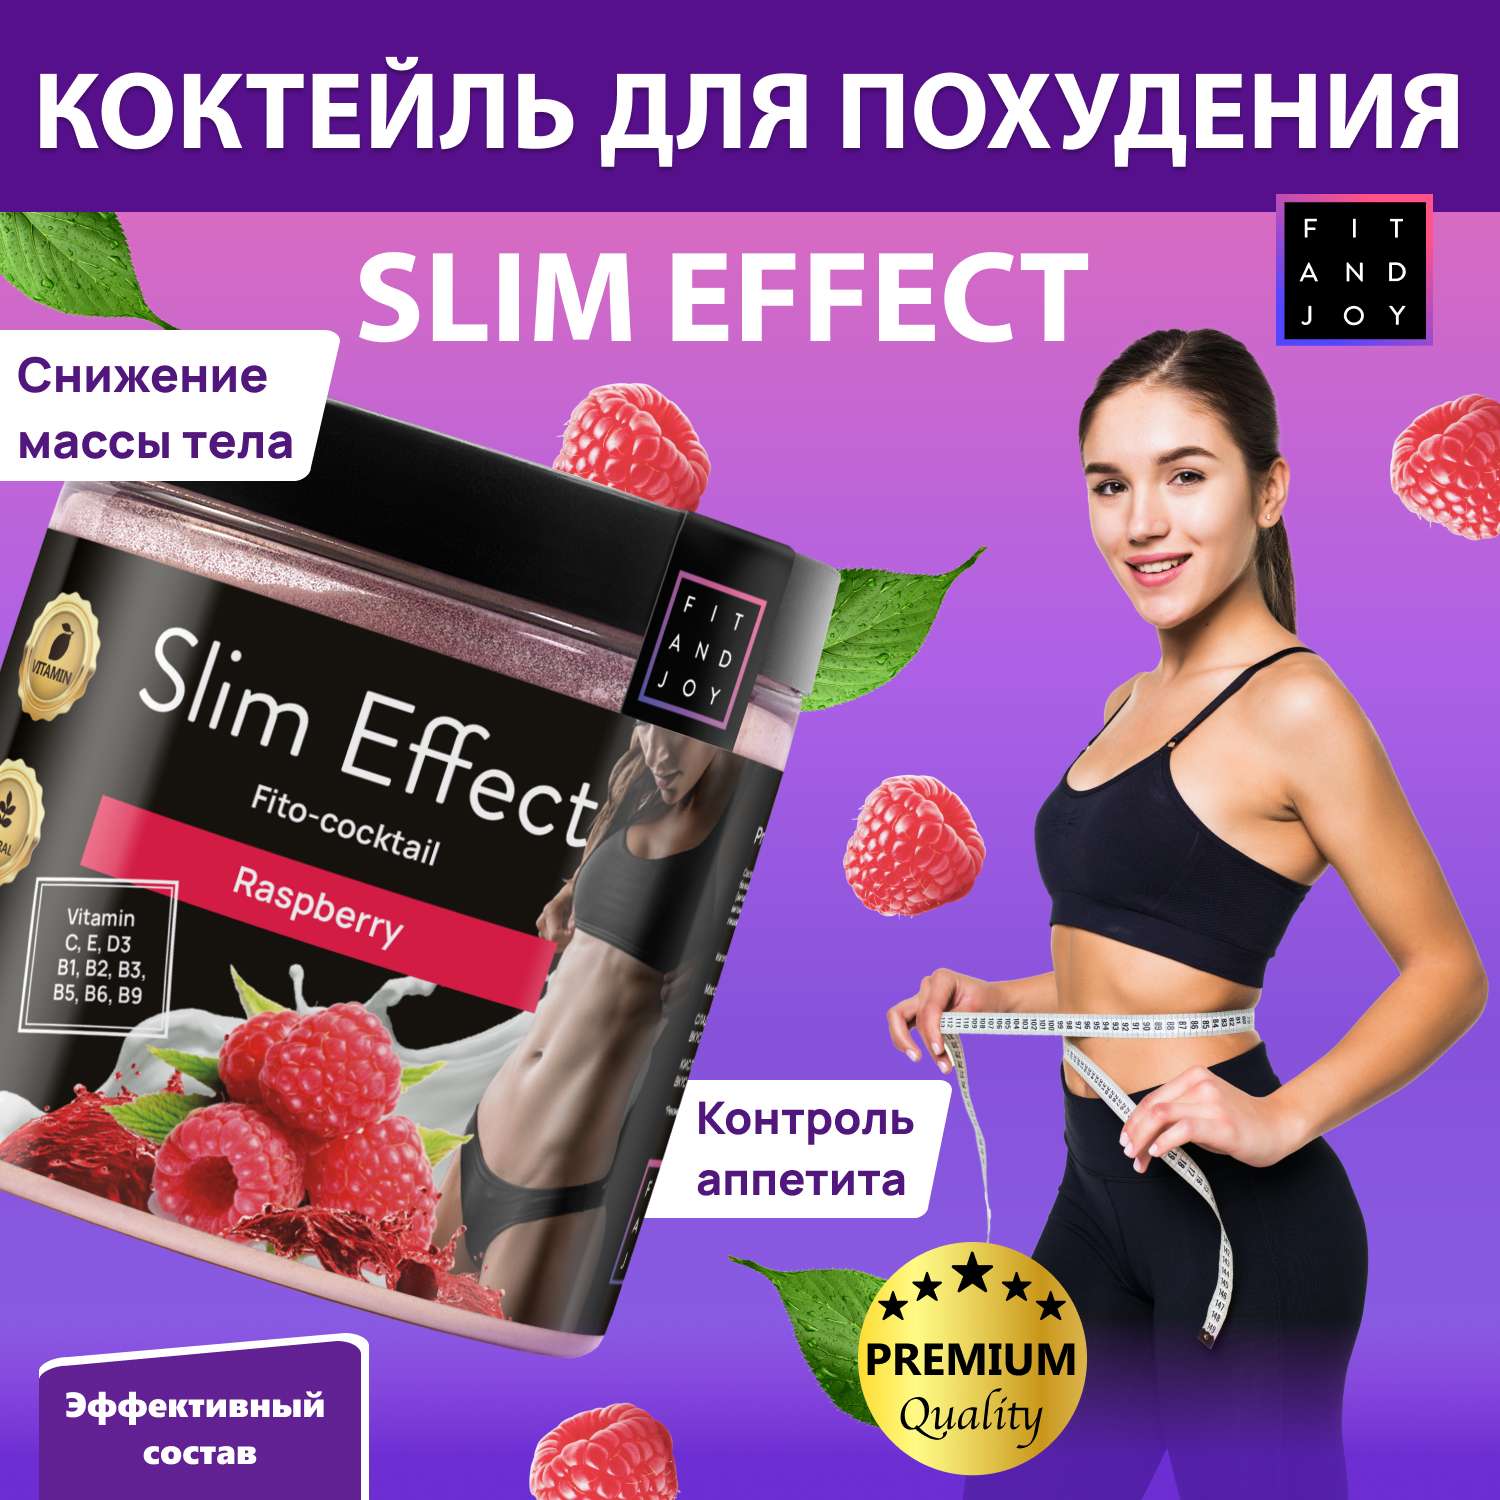 Фитококтейль FIT AND JOY Slim Effect для снижения аппетита и похудения Малина - фото 2